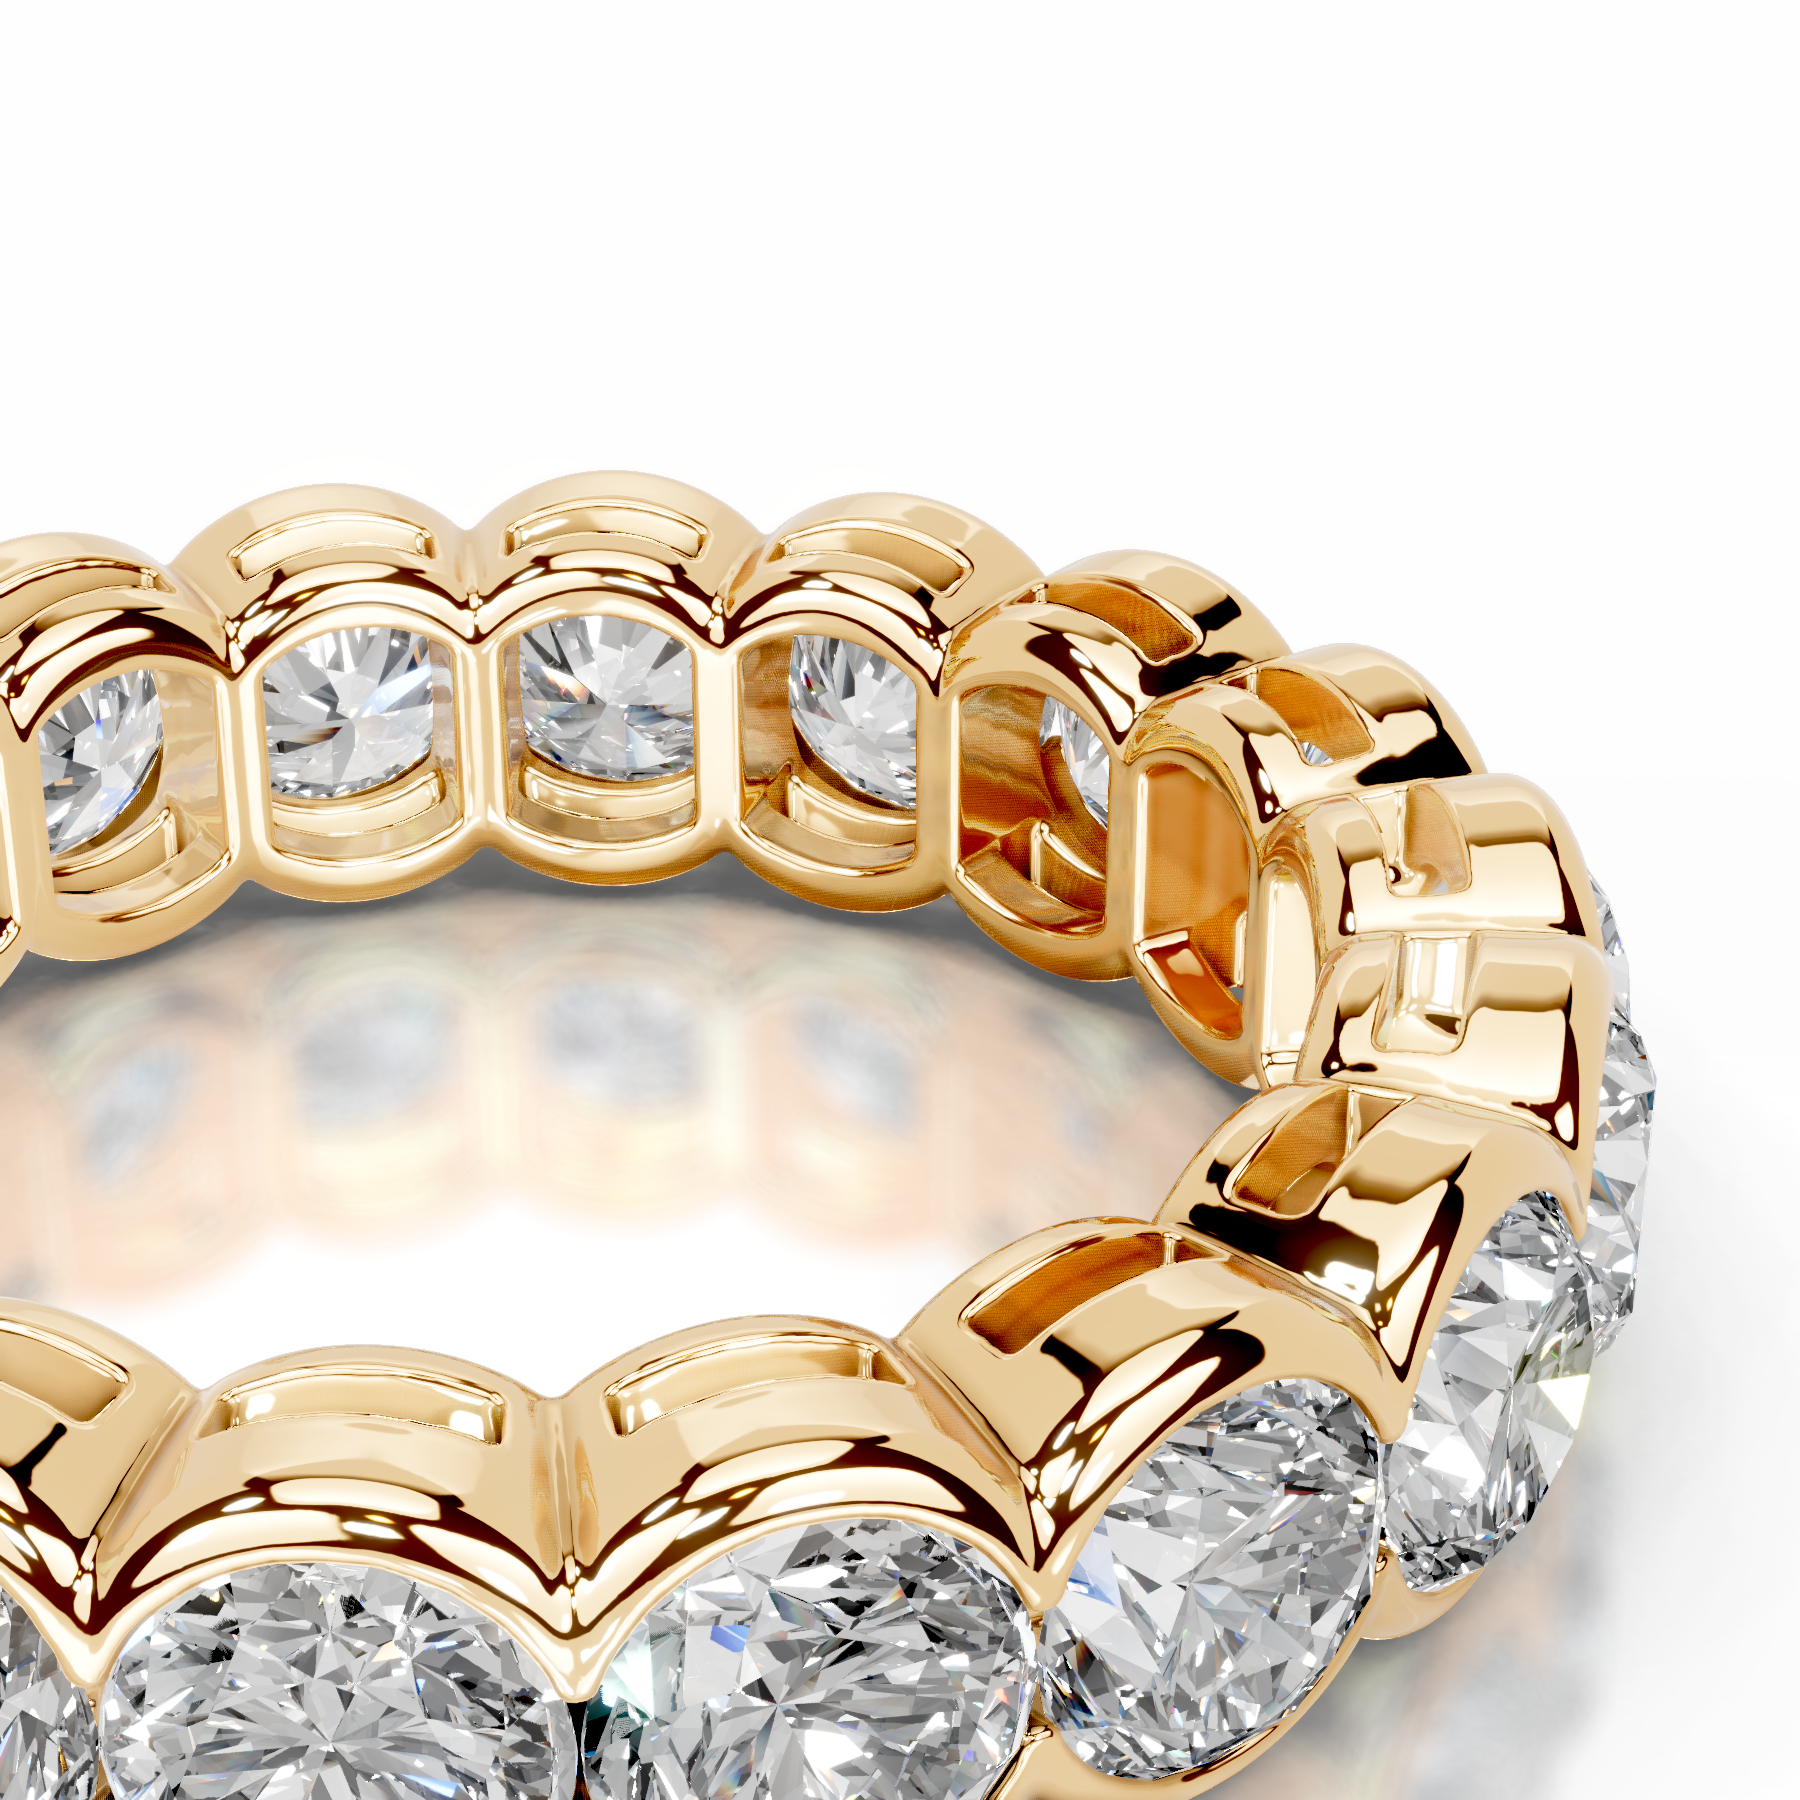 Velinda Diamond Wedding Ring   (4 Carat) -18K Yellow Gold